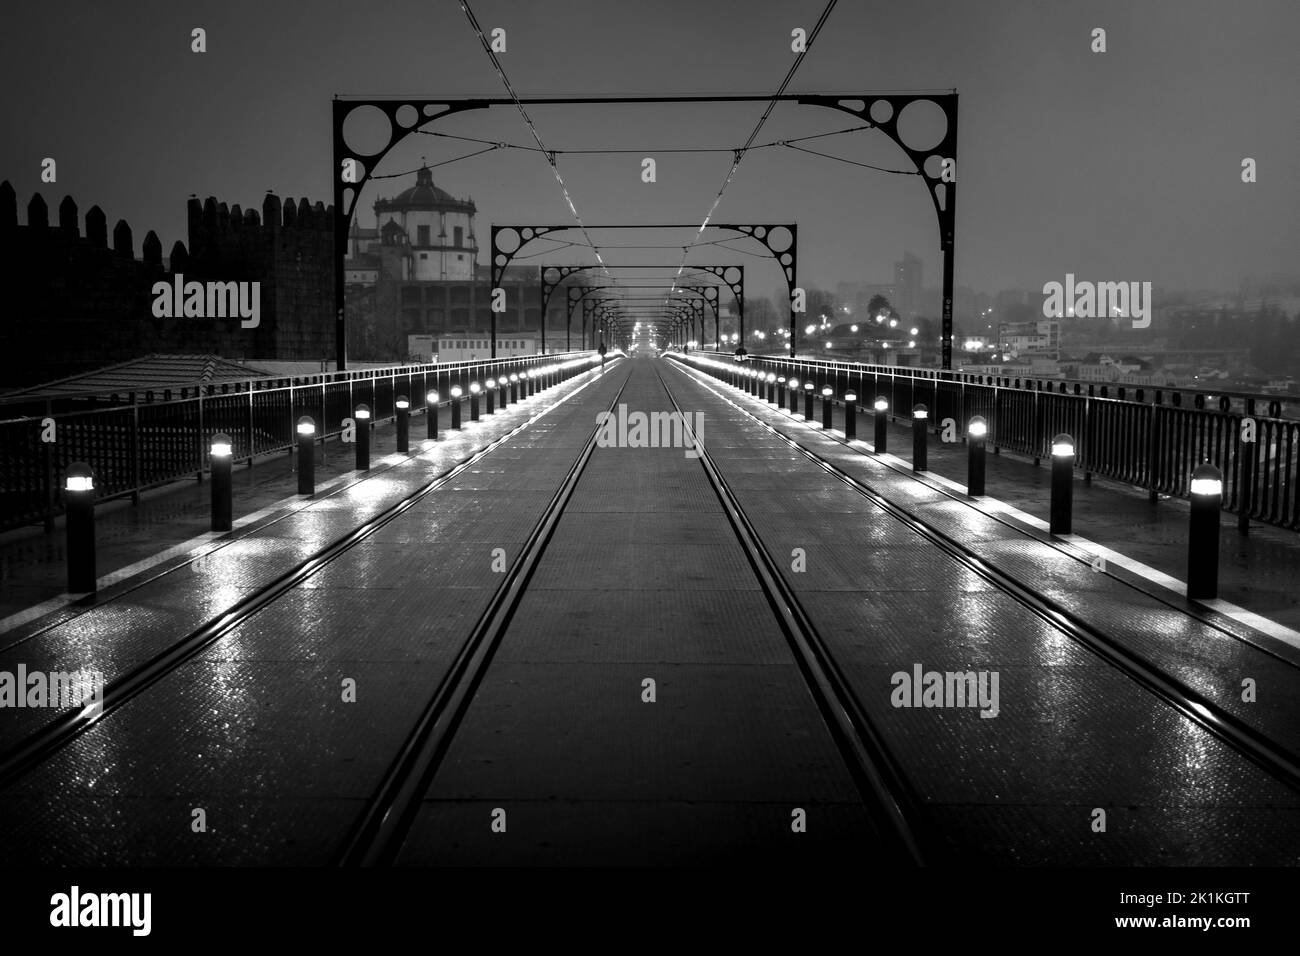 Night view of the Dom Luis I Bridge, Porto, Portugal. Black and white photo. Stock Photo